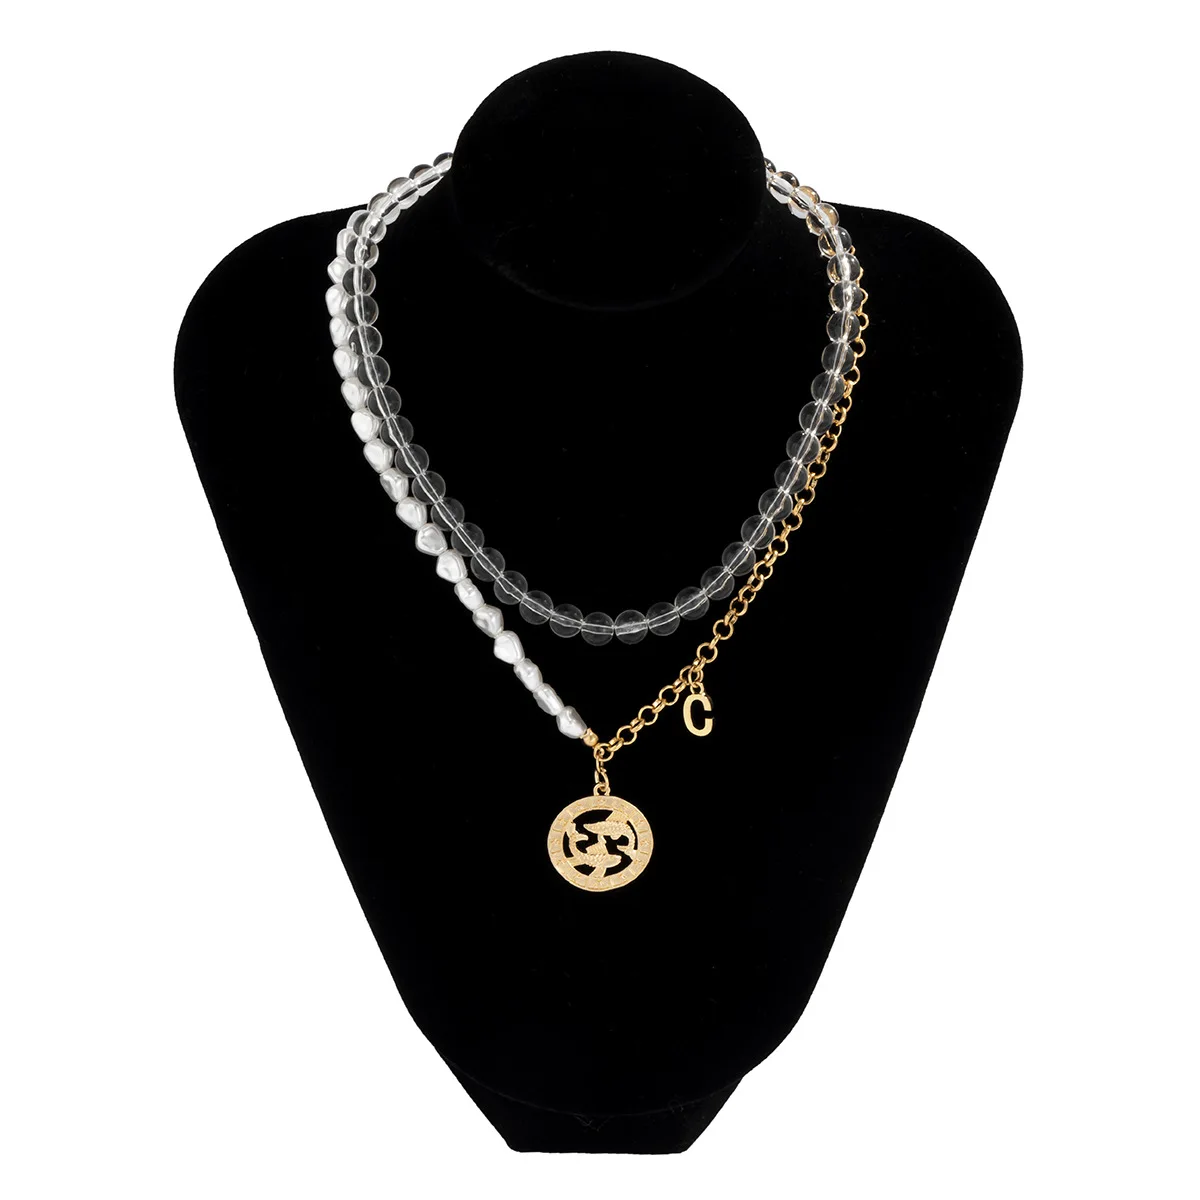 Simple hollow double fish pendant transparent beads splice irregular pearl necklace accessories women